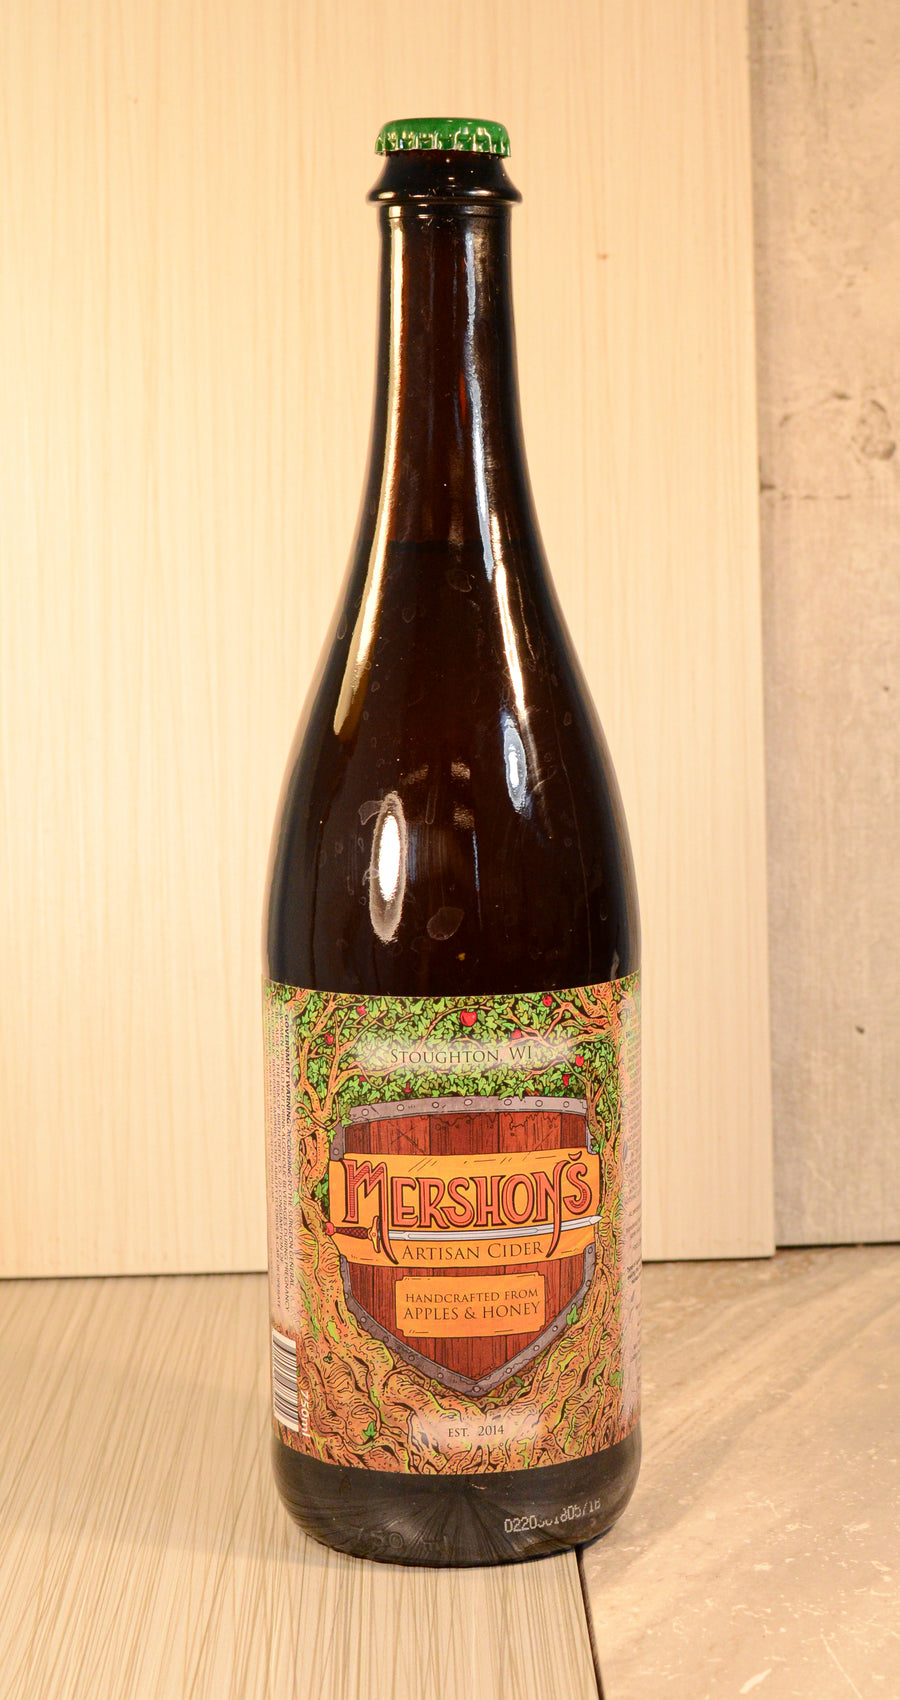 Mershon's Cider, Artisan Cider 750ml